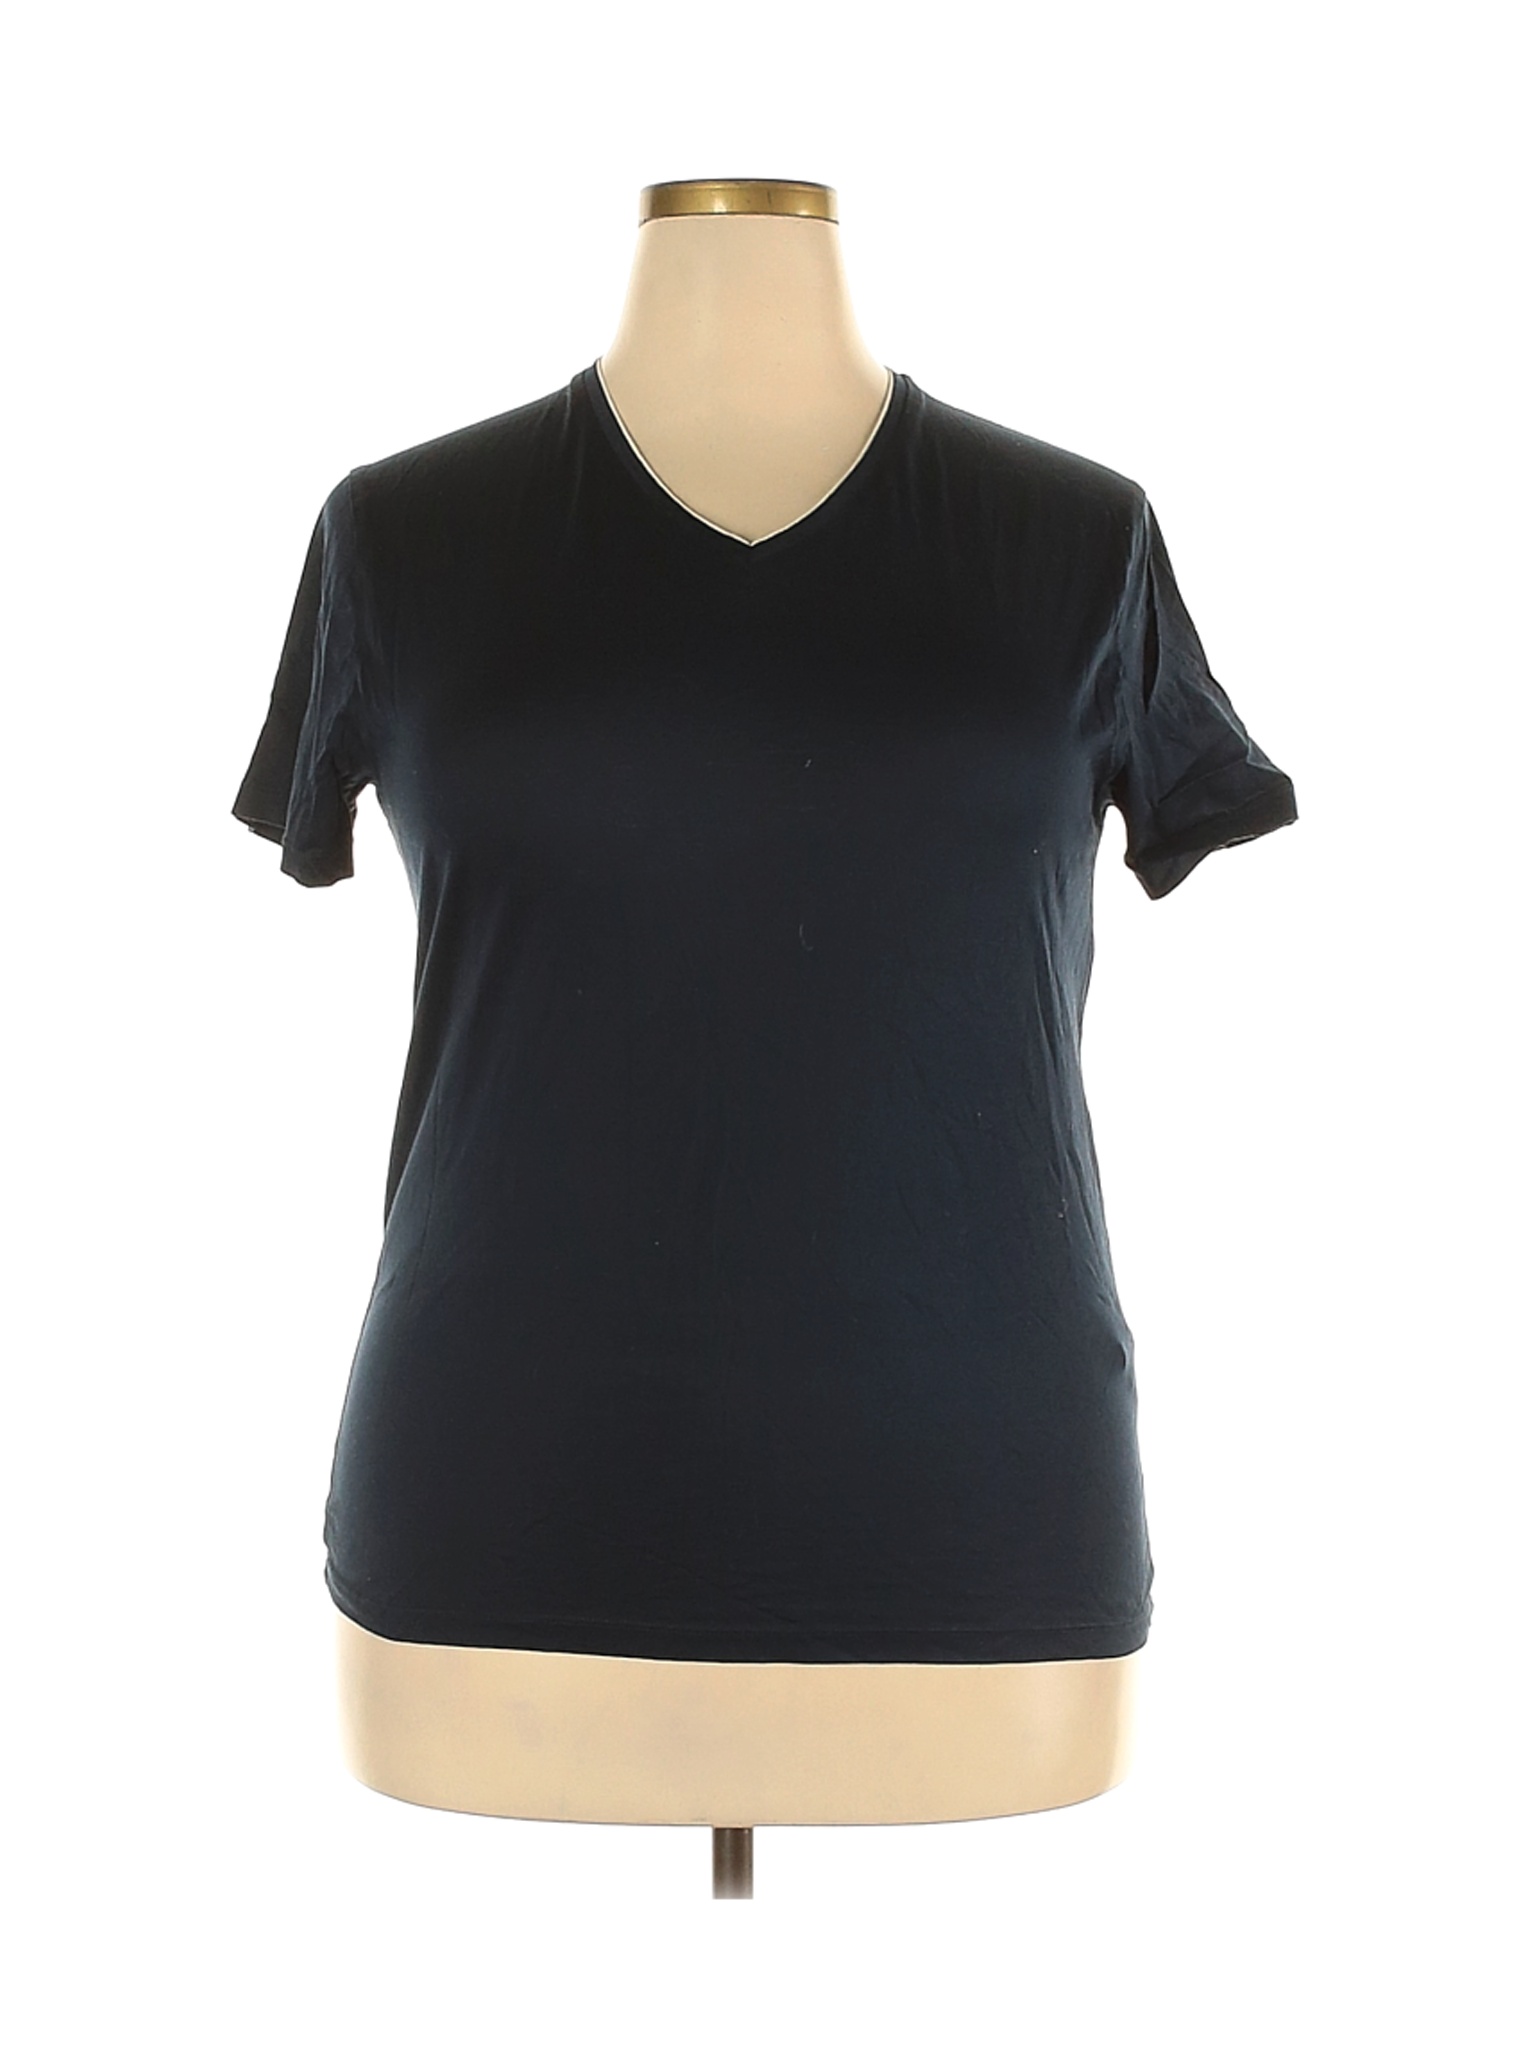 BOSS by HUGO BOSS Women Black Short Sleeve T-Shirt XXL | eBay